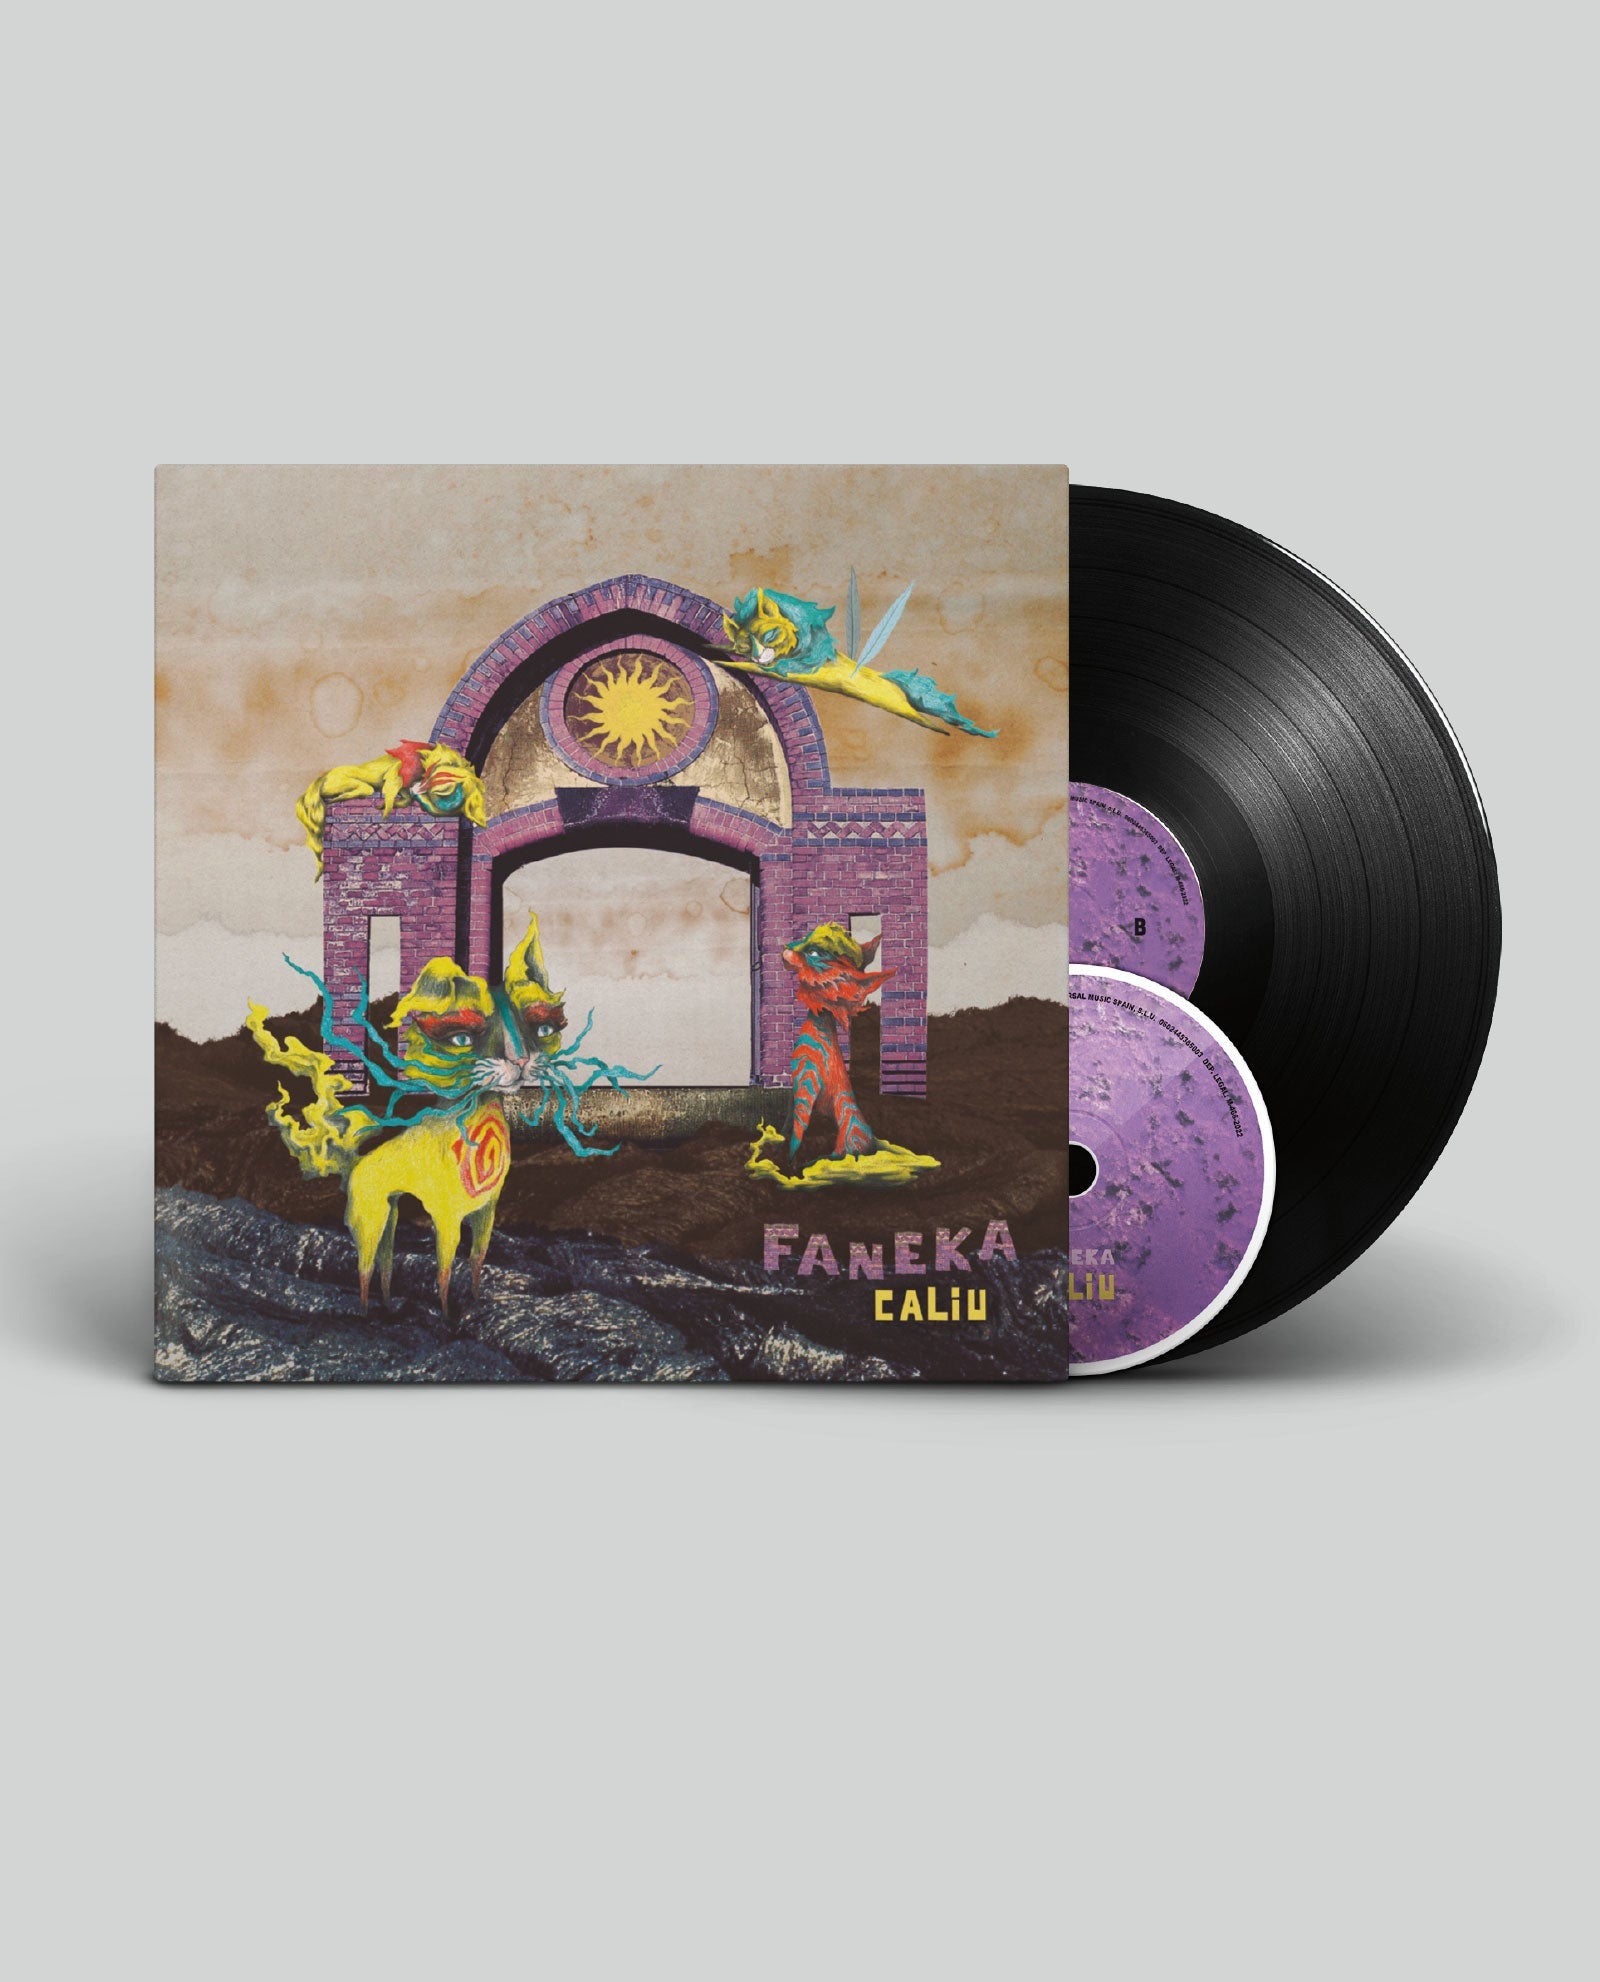 Faneka - LP + CD ¡Firmado! "Caliú" - D2fy - Metales Preciosos